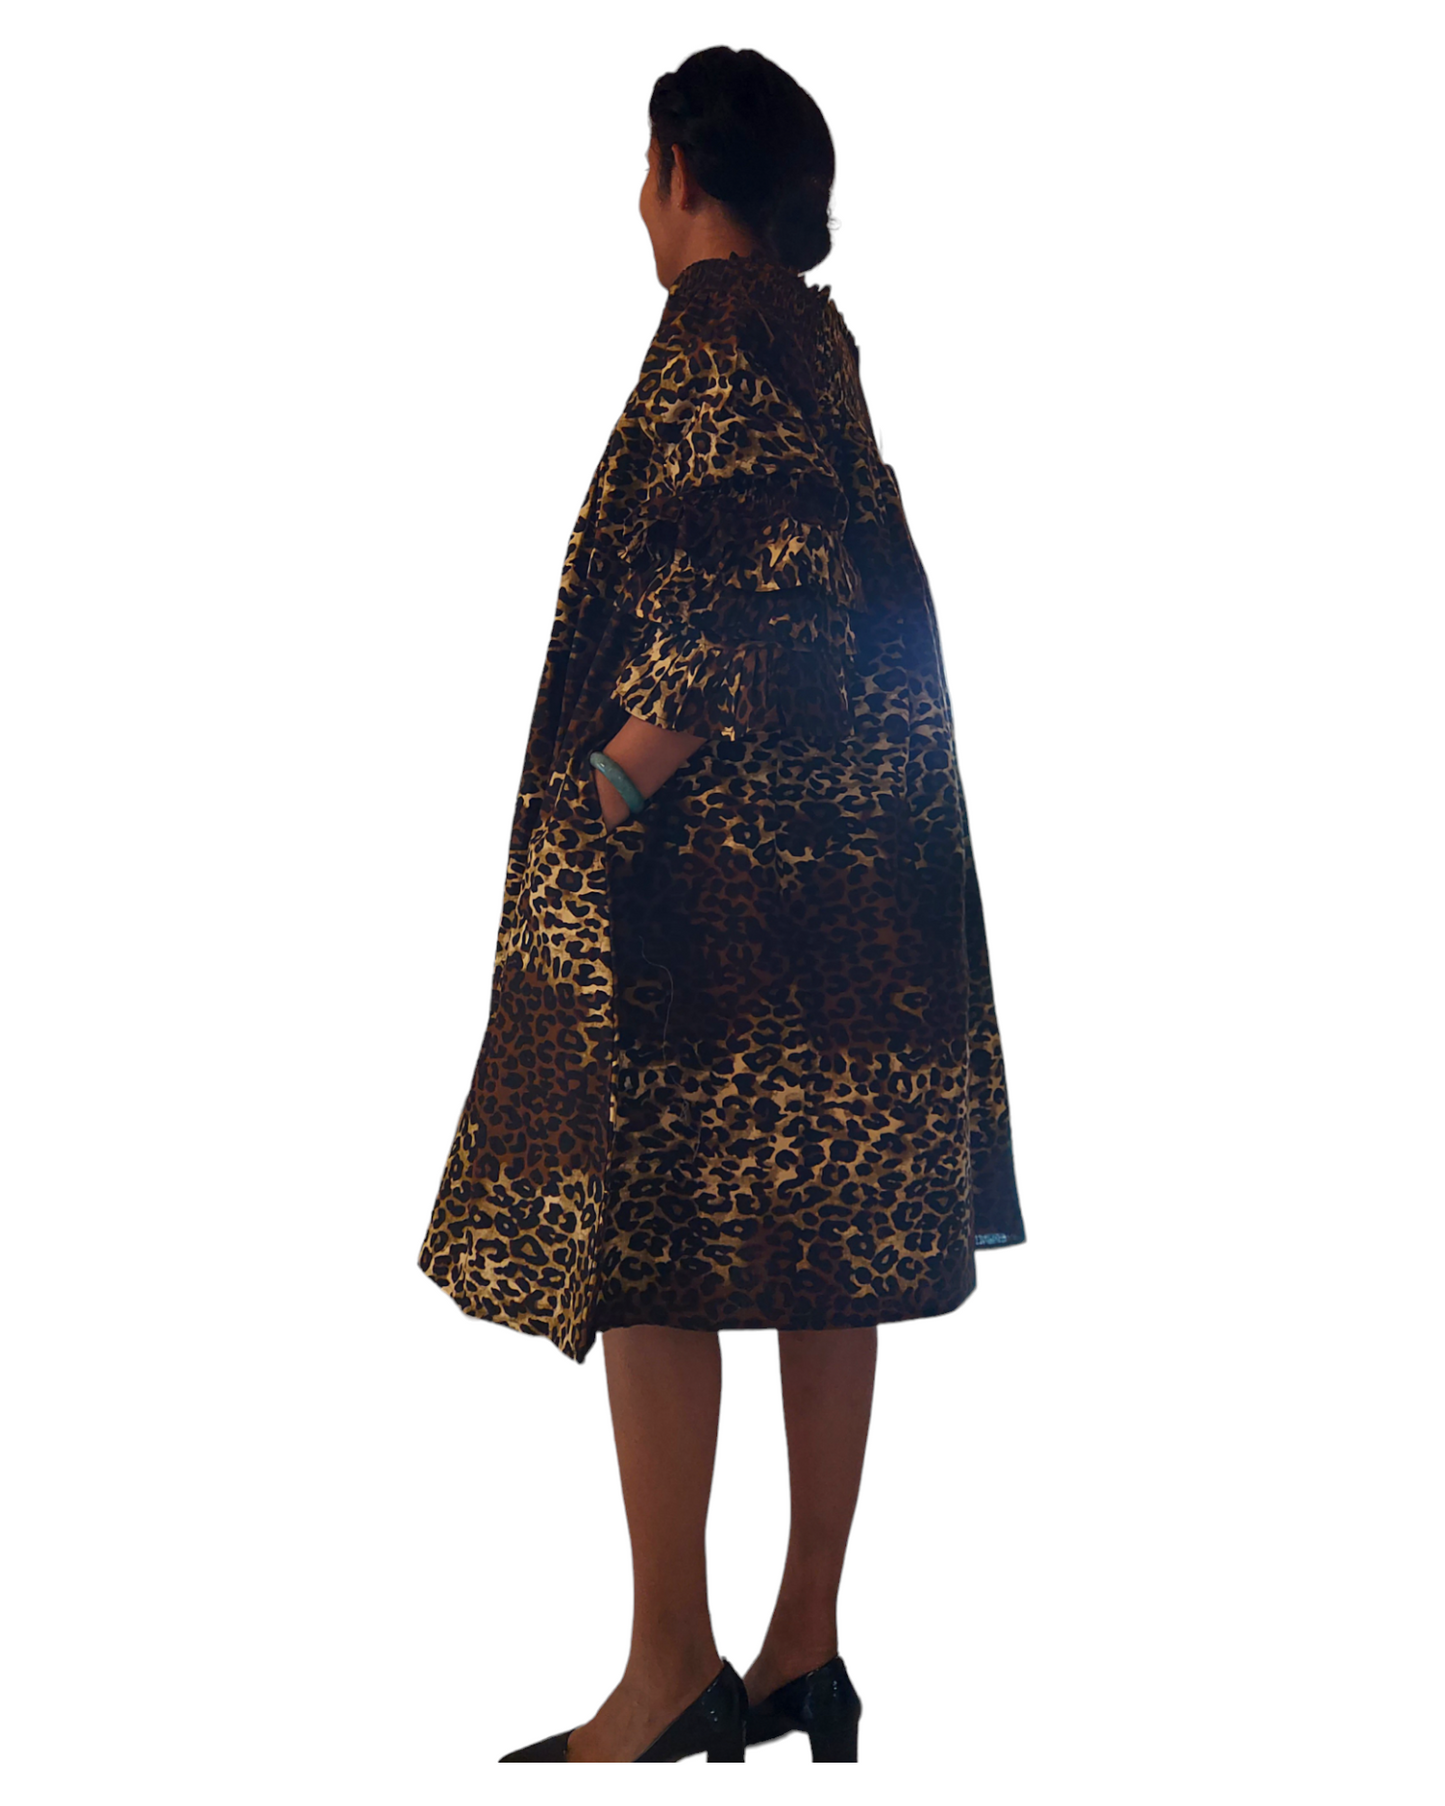 018- Women Middi Off Shoulder Dress - Brown Animal Print